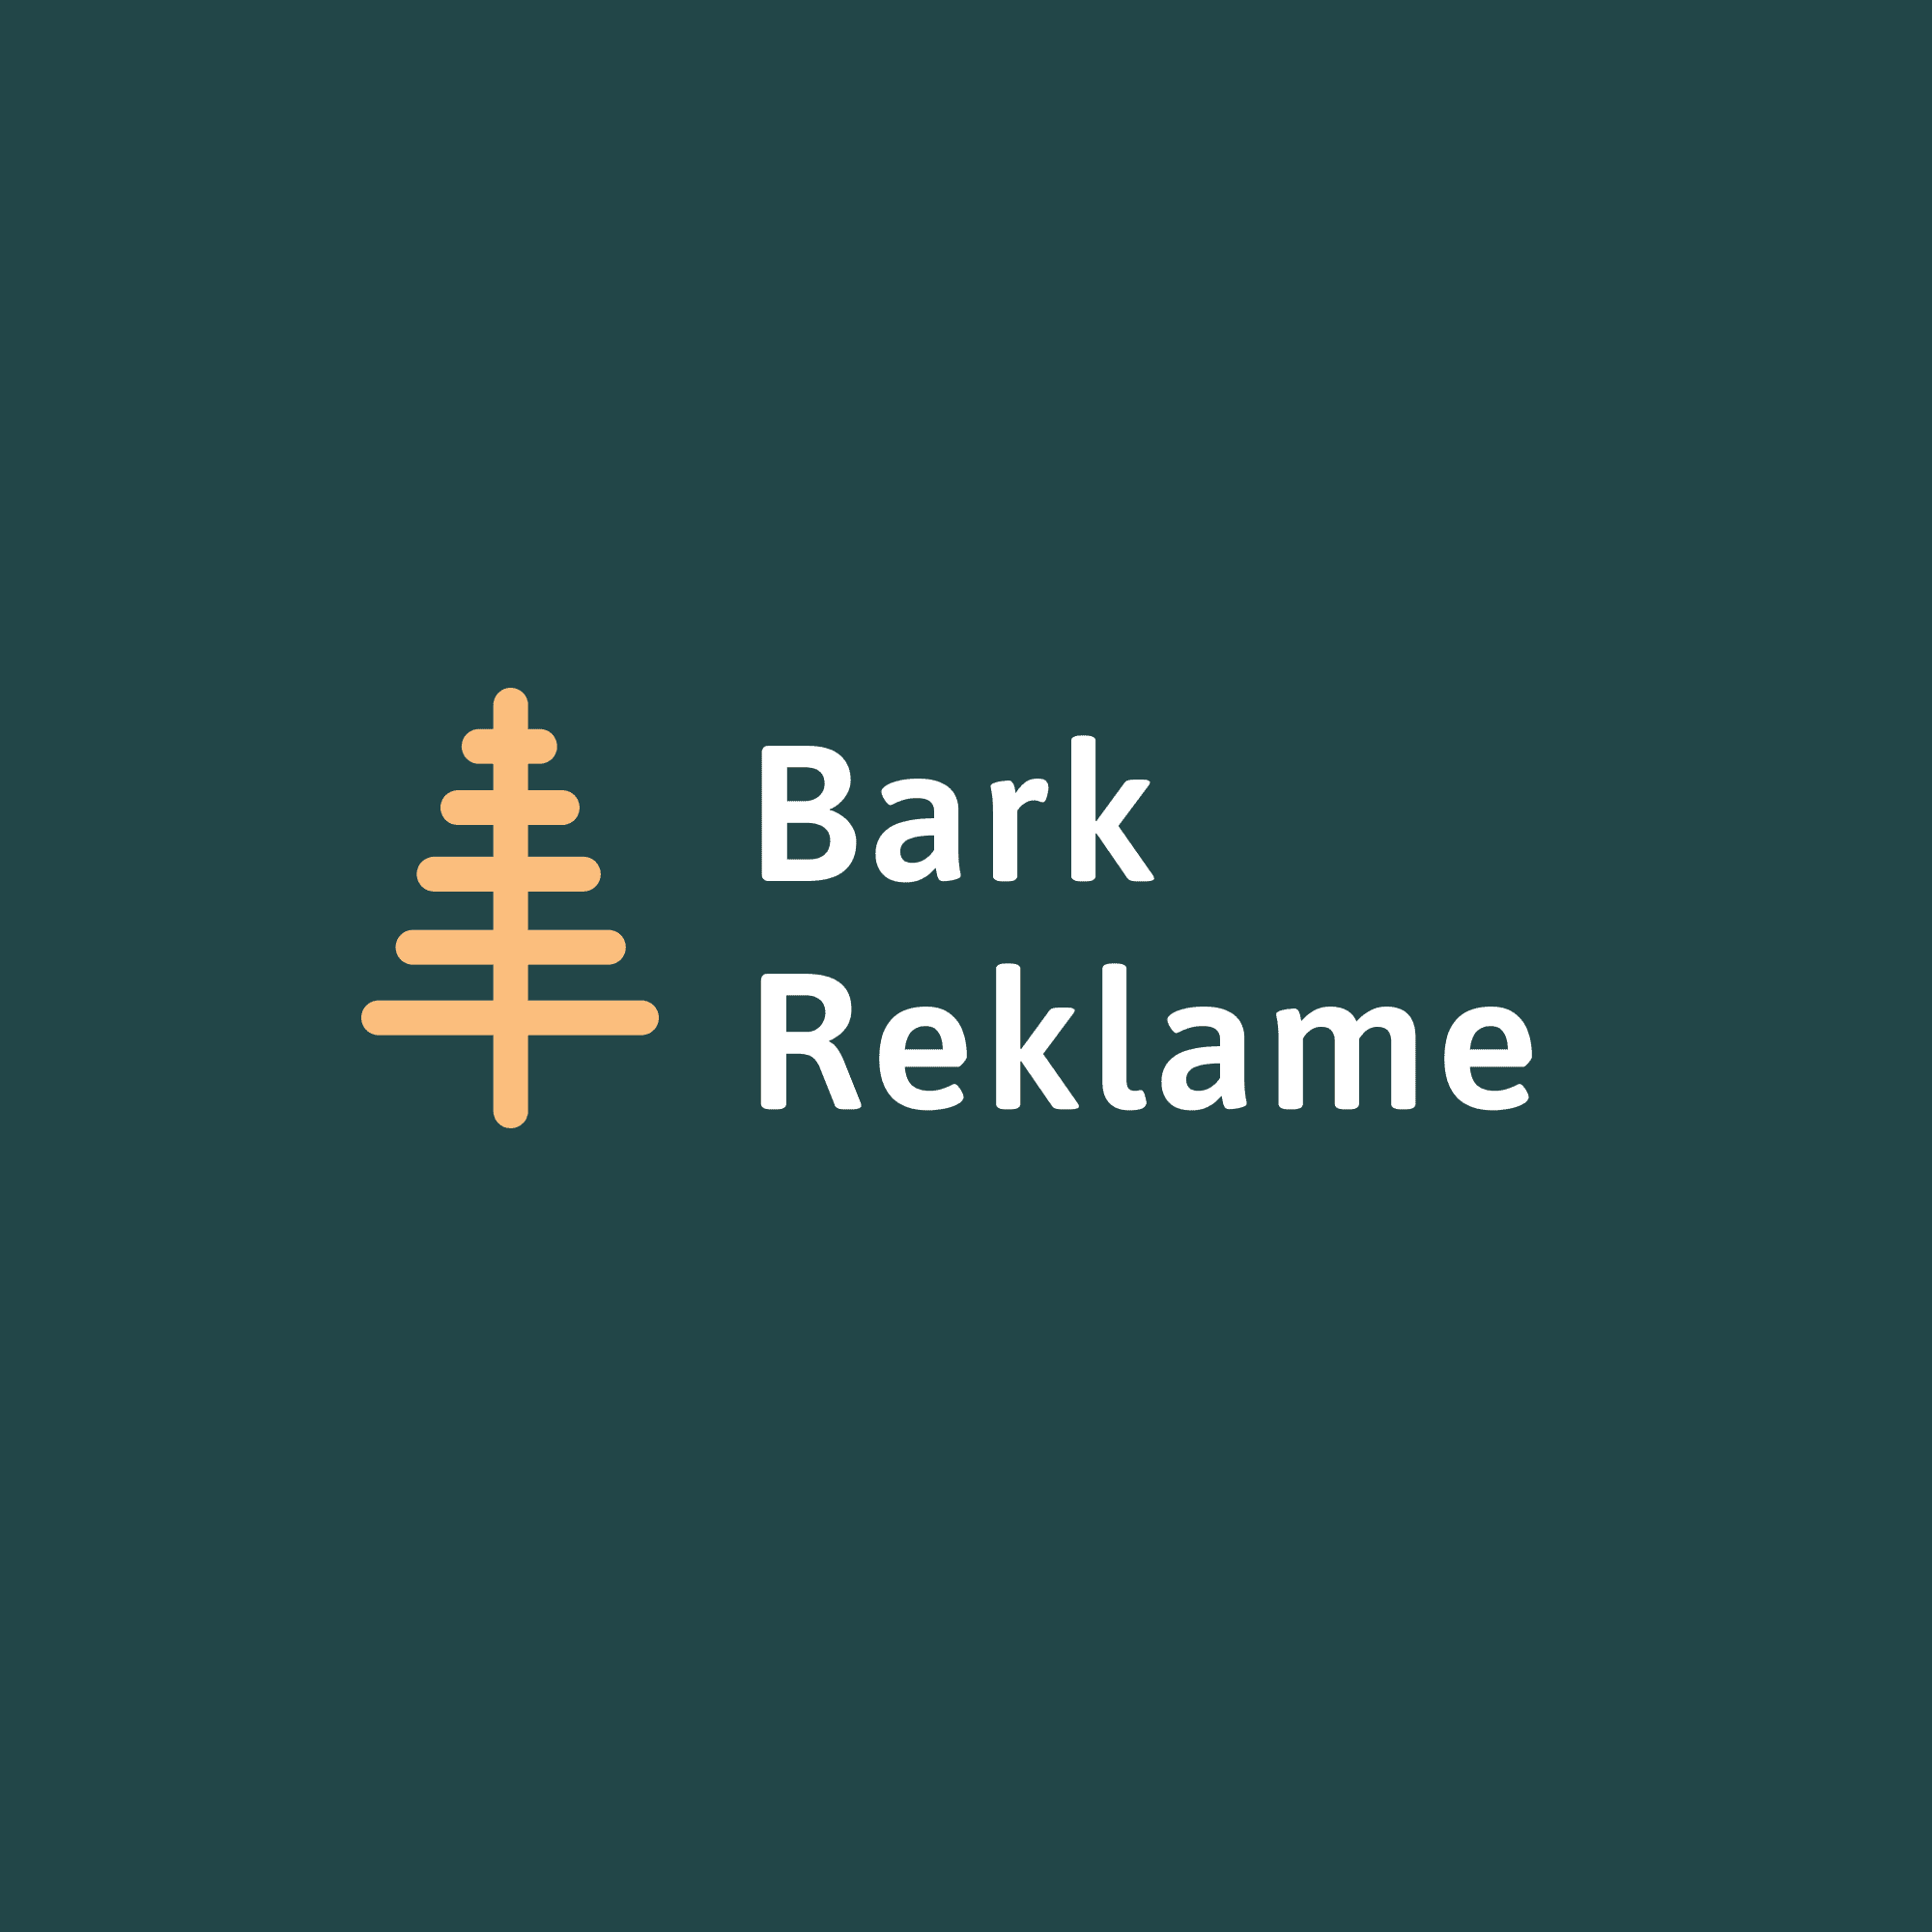 Bark Reklame - Reklamebyrå